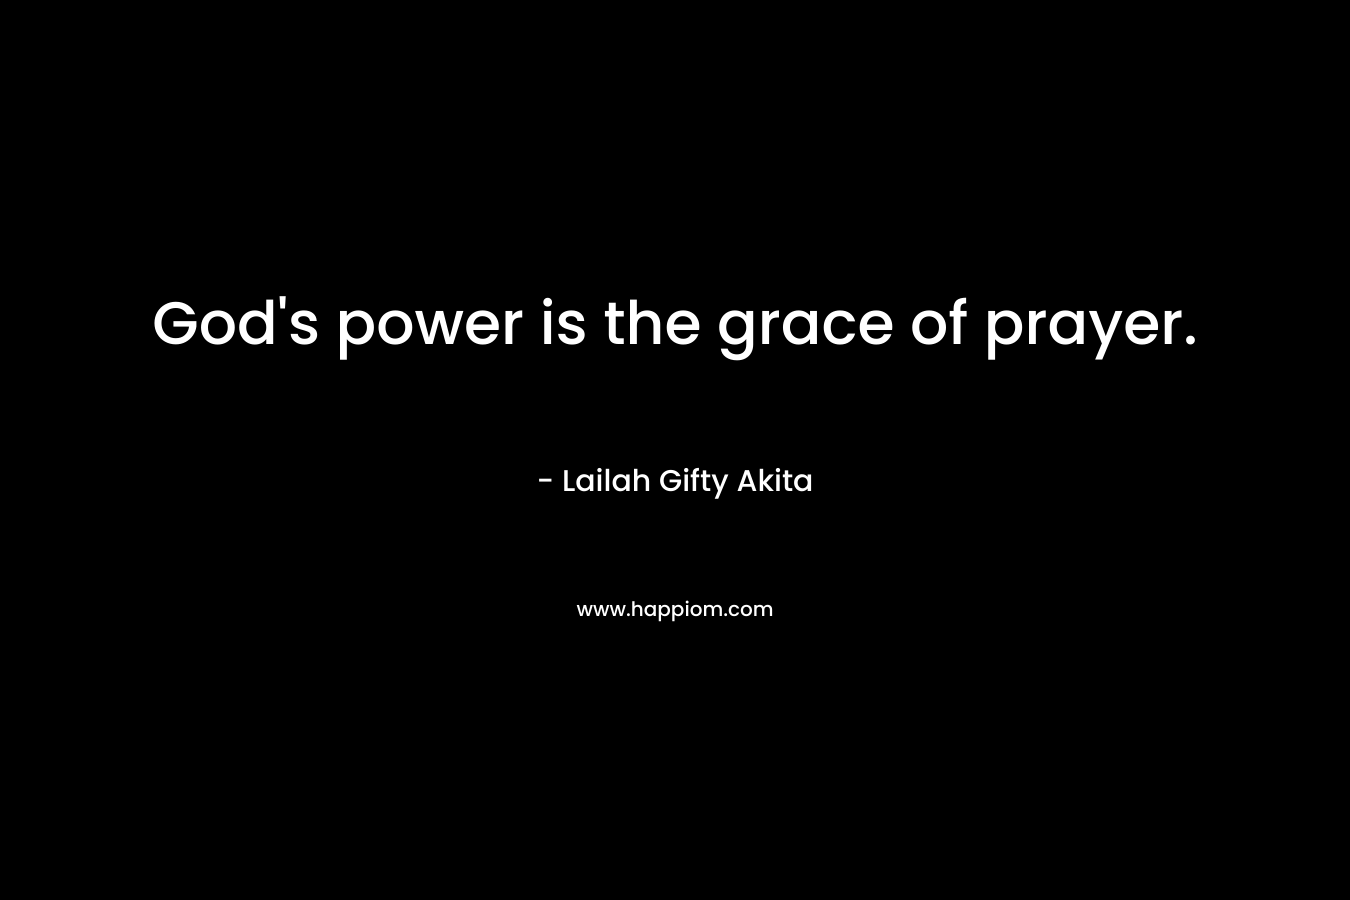 God's power is the grace of prayer.